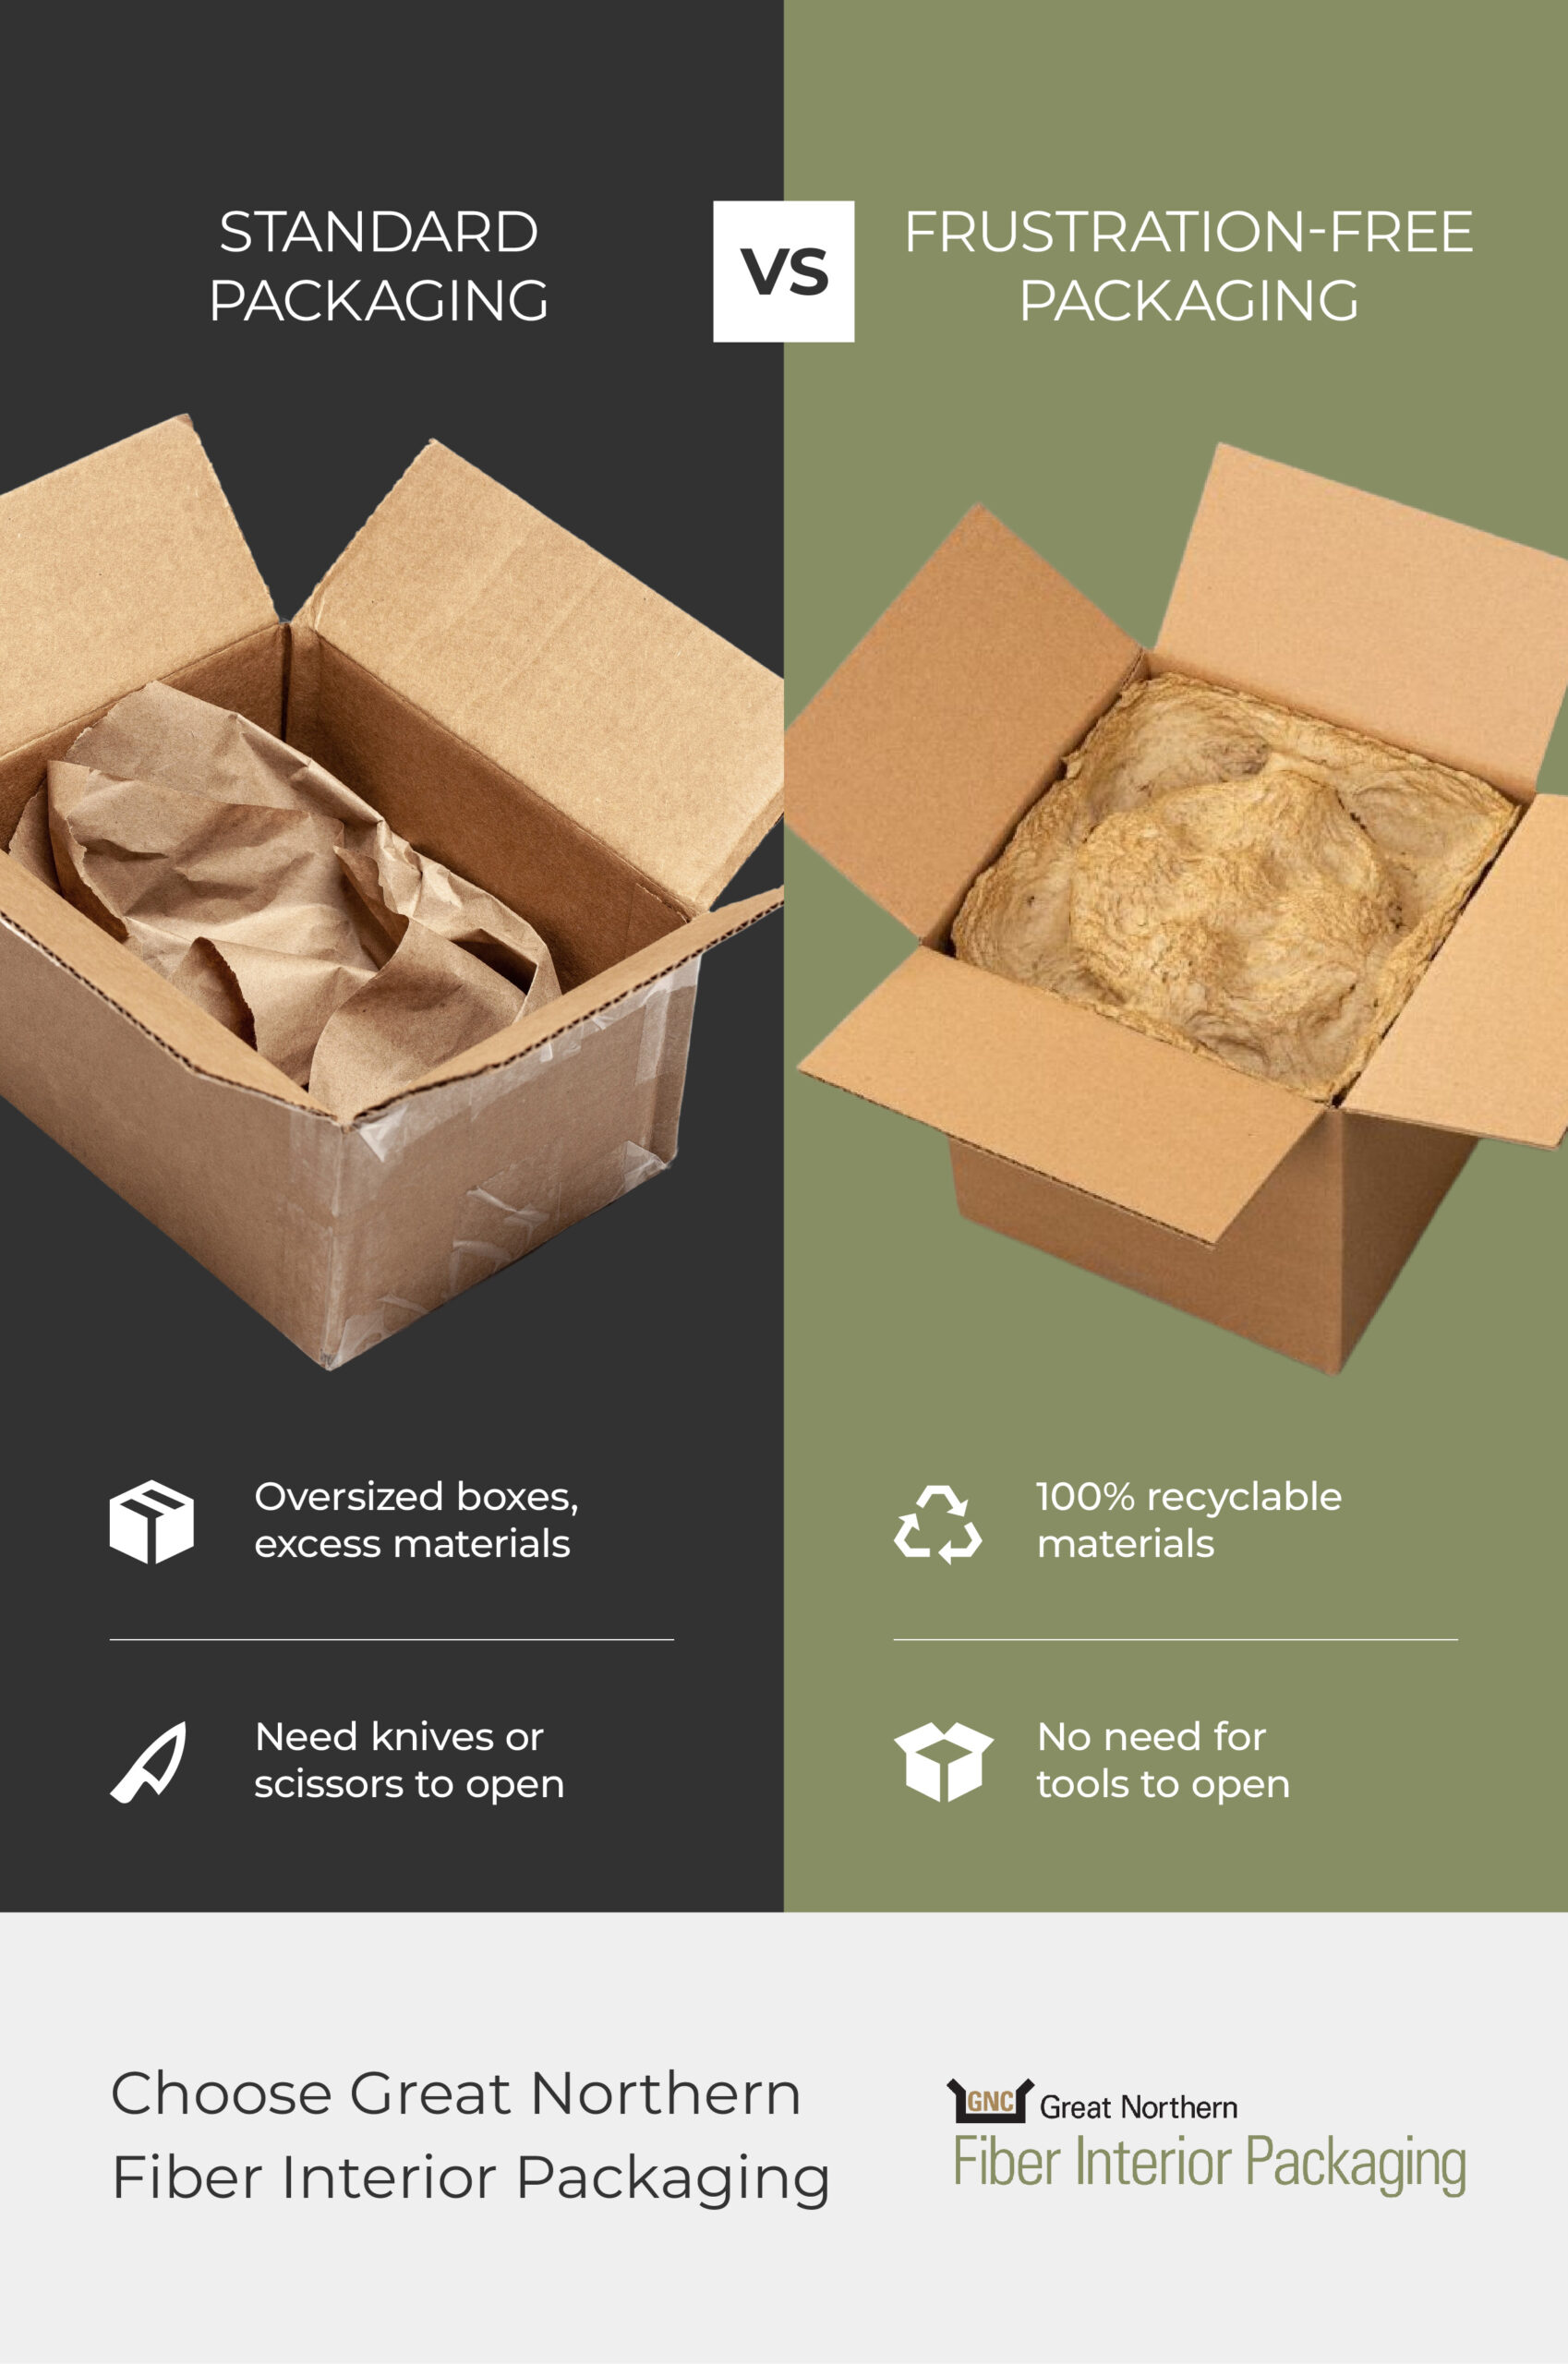 Standard vs frustration-free packaging